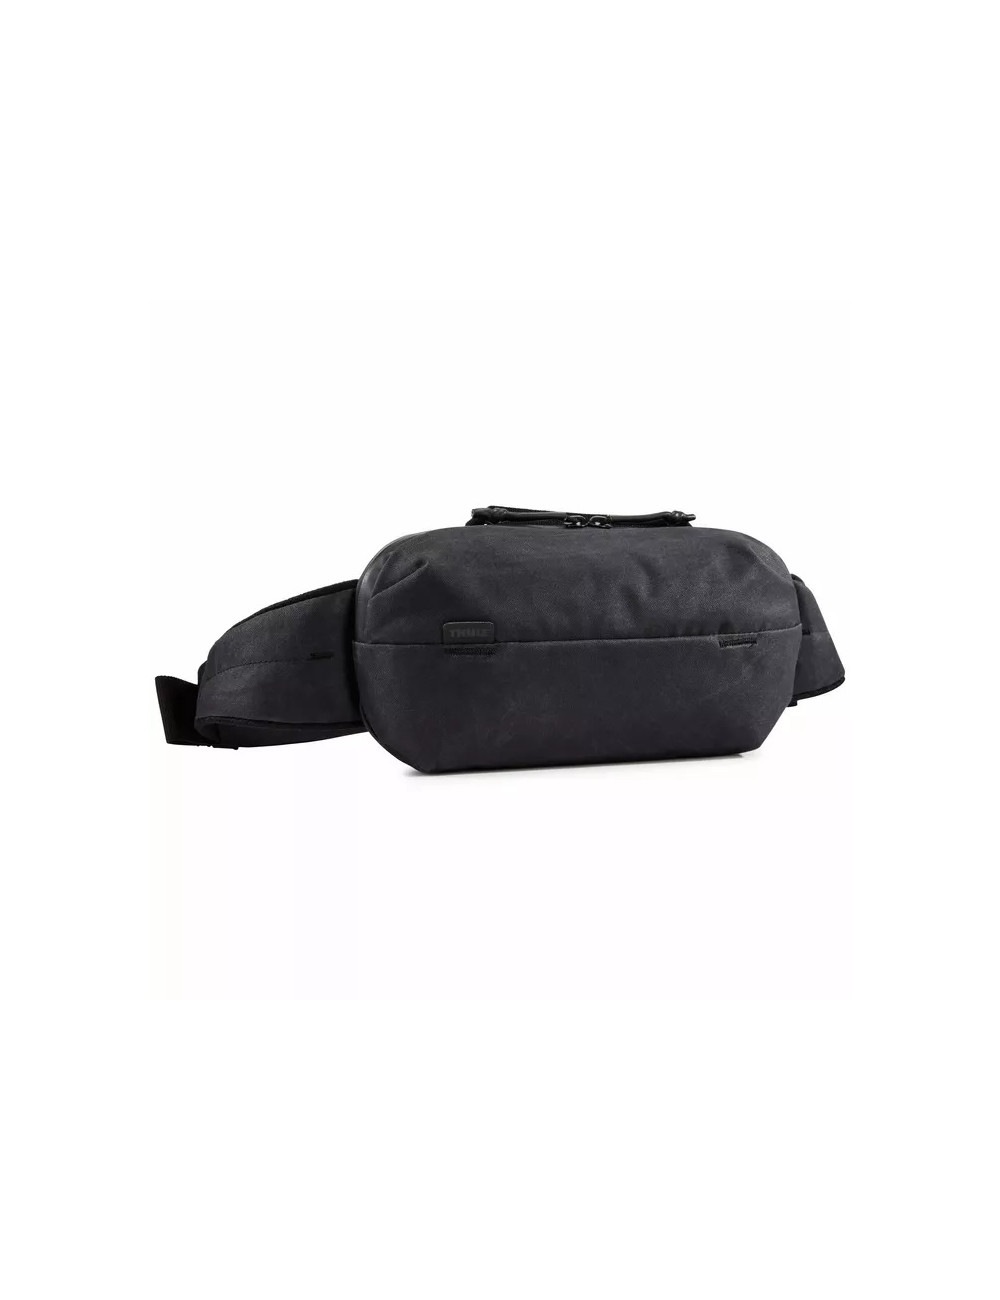 Thule Aion Sling Bag TASB-102 Black, Waistpack